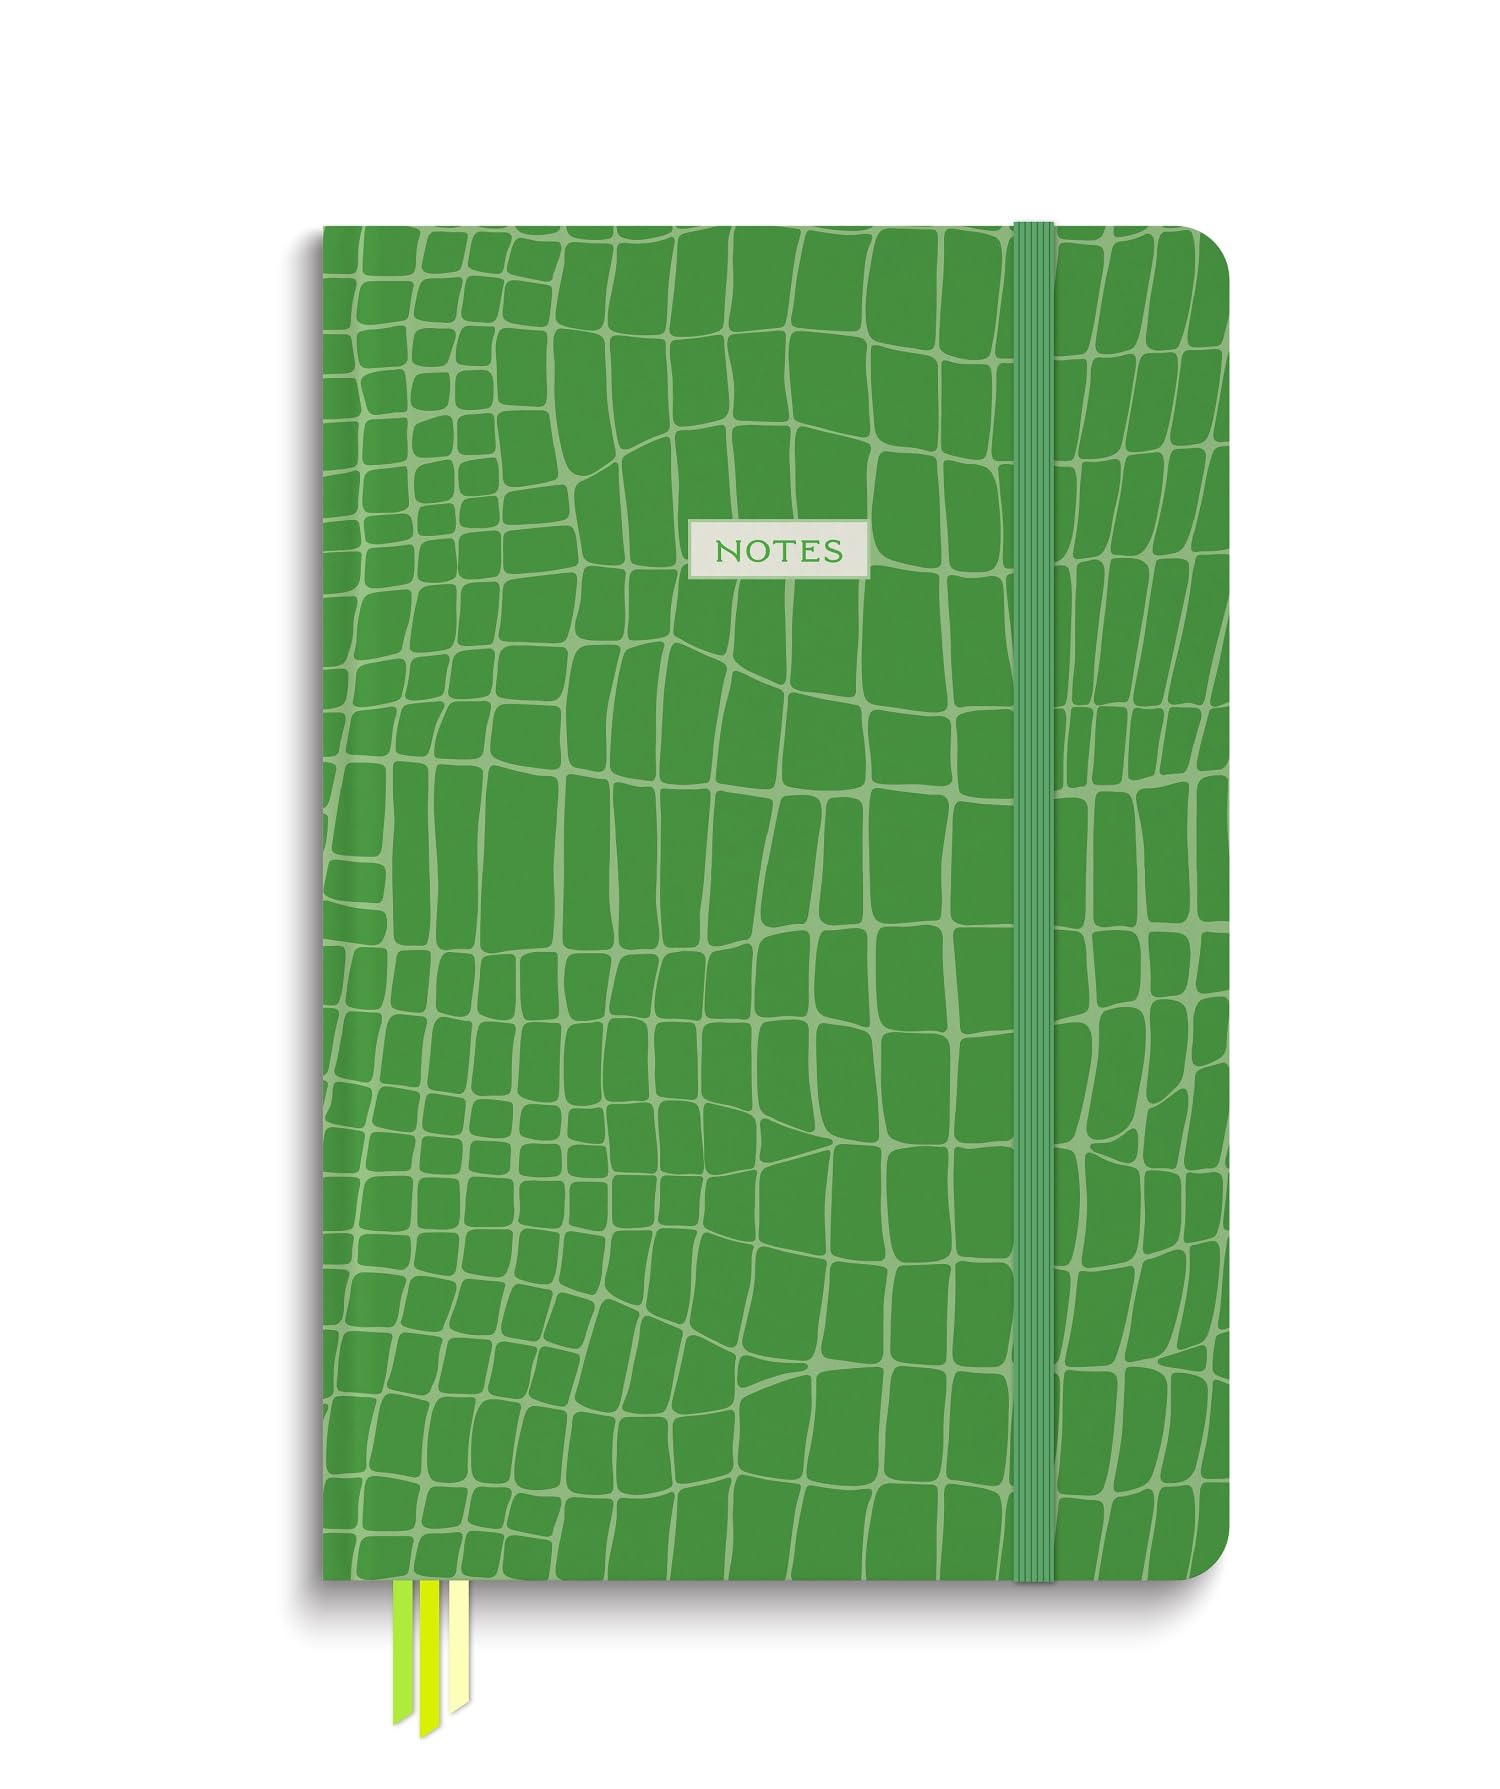 Southworth Medium Case Bound Journal, 5.5" x 8.25", Alligator/Crocodile Texture, Premium 28 lb/105 gsm Paper, 160 Lined Sheets (91072)